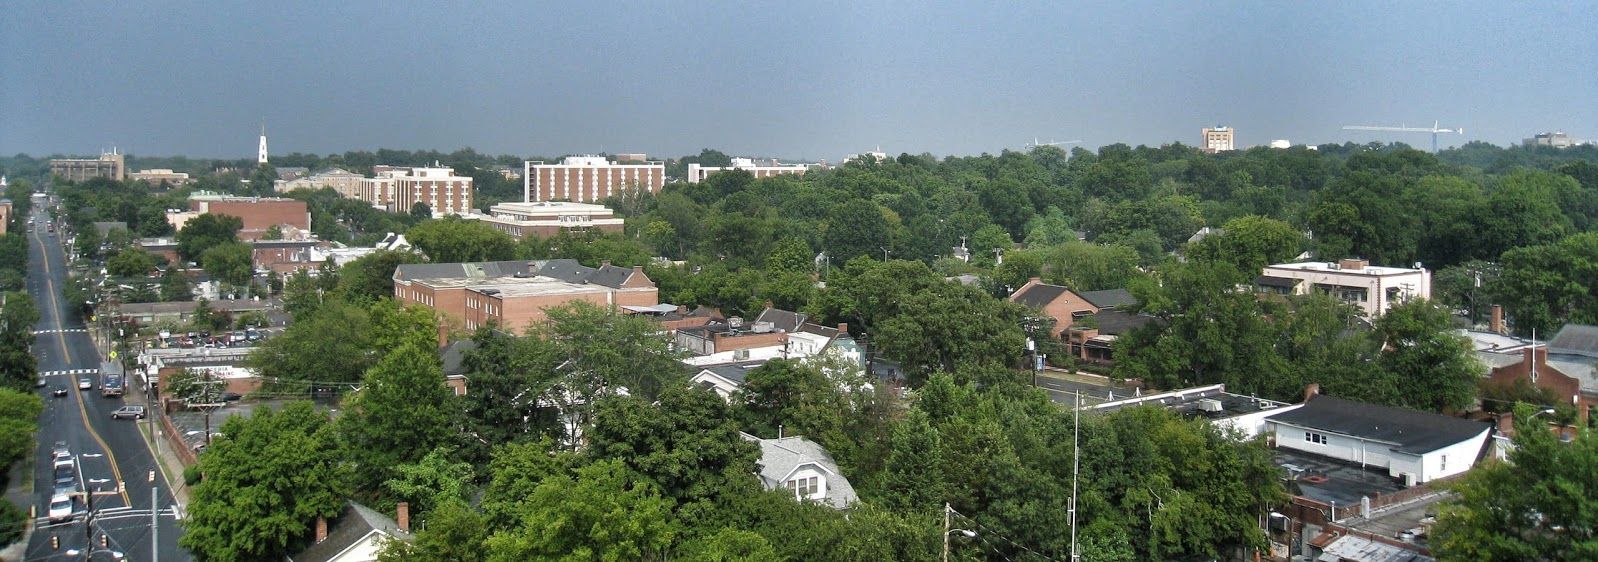 Aerial View of Chapel Hill North Carolina